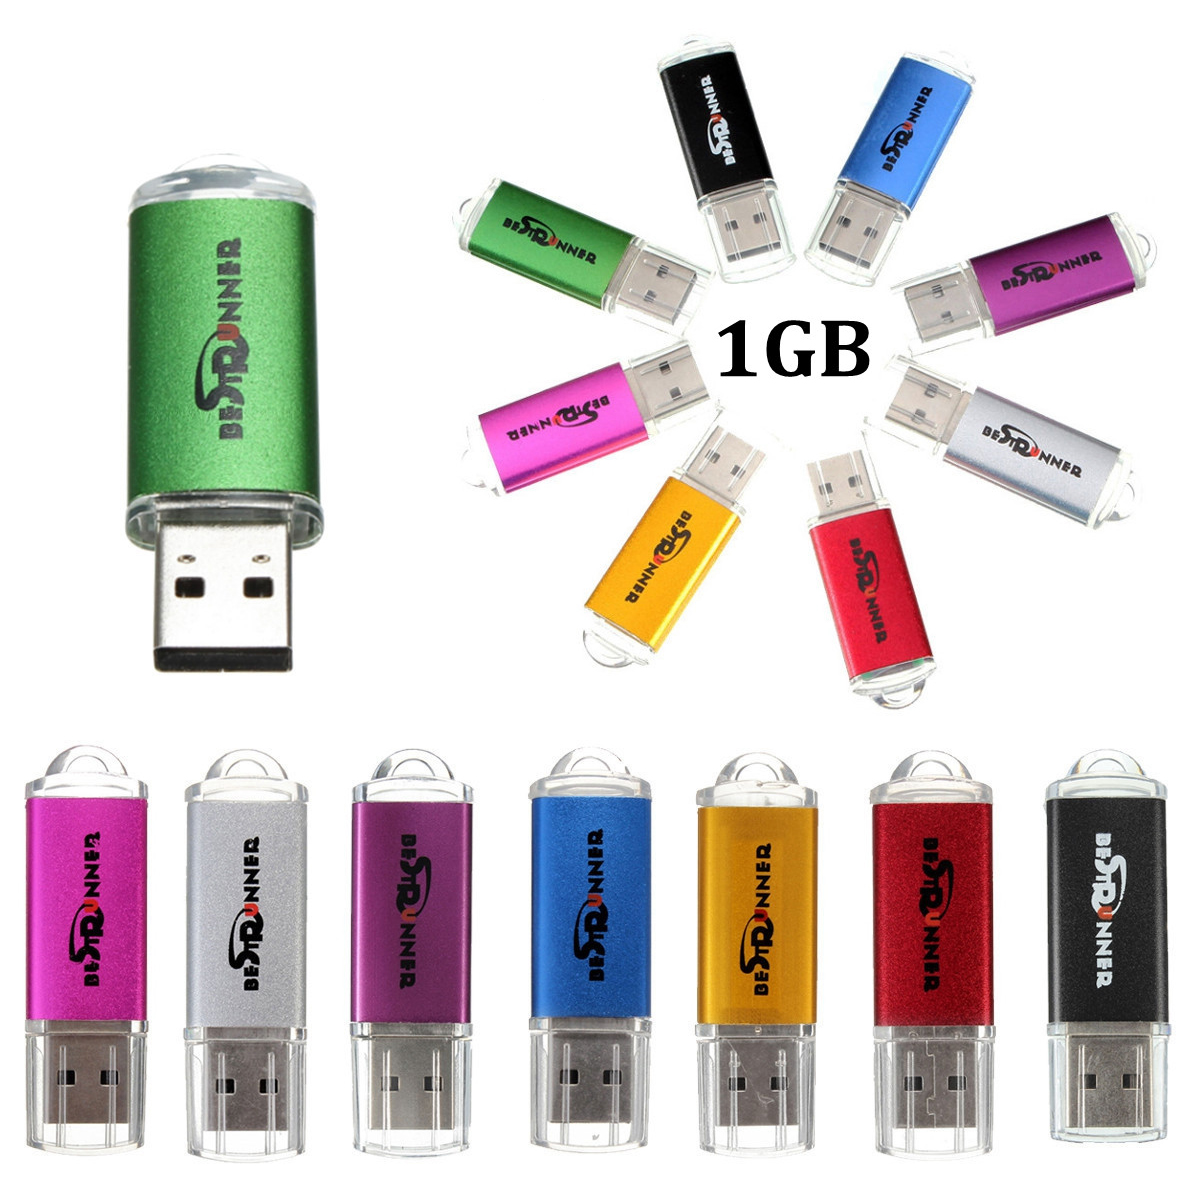 Bestrunner-Multi-Color-Portable-USB-20-1GB960M-Pendrive-USB-Disk-for-Macbook-Laptop-PC-1723018-2